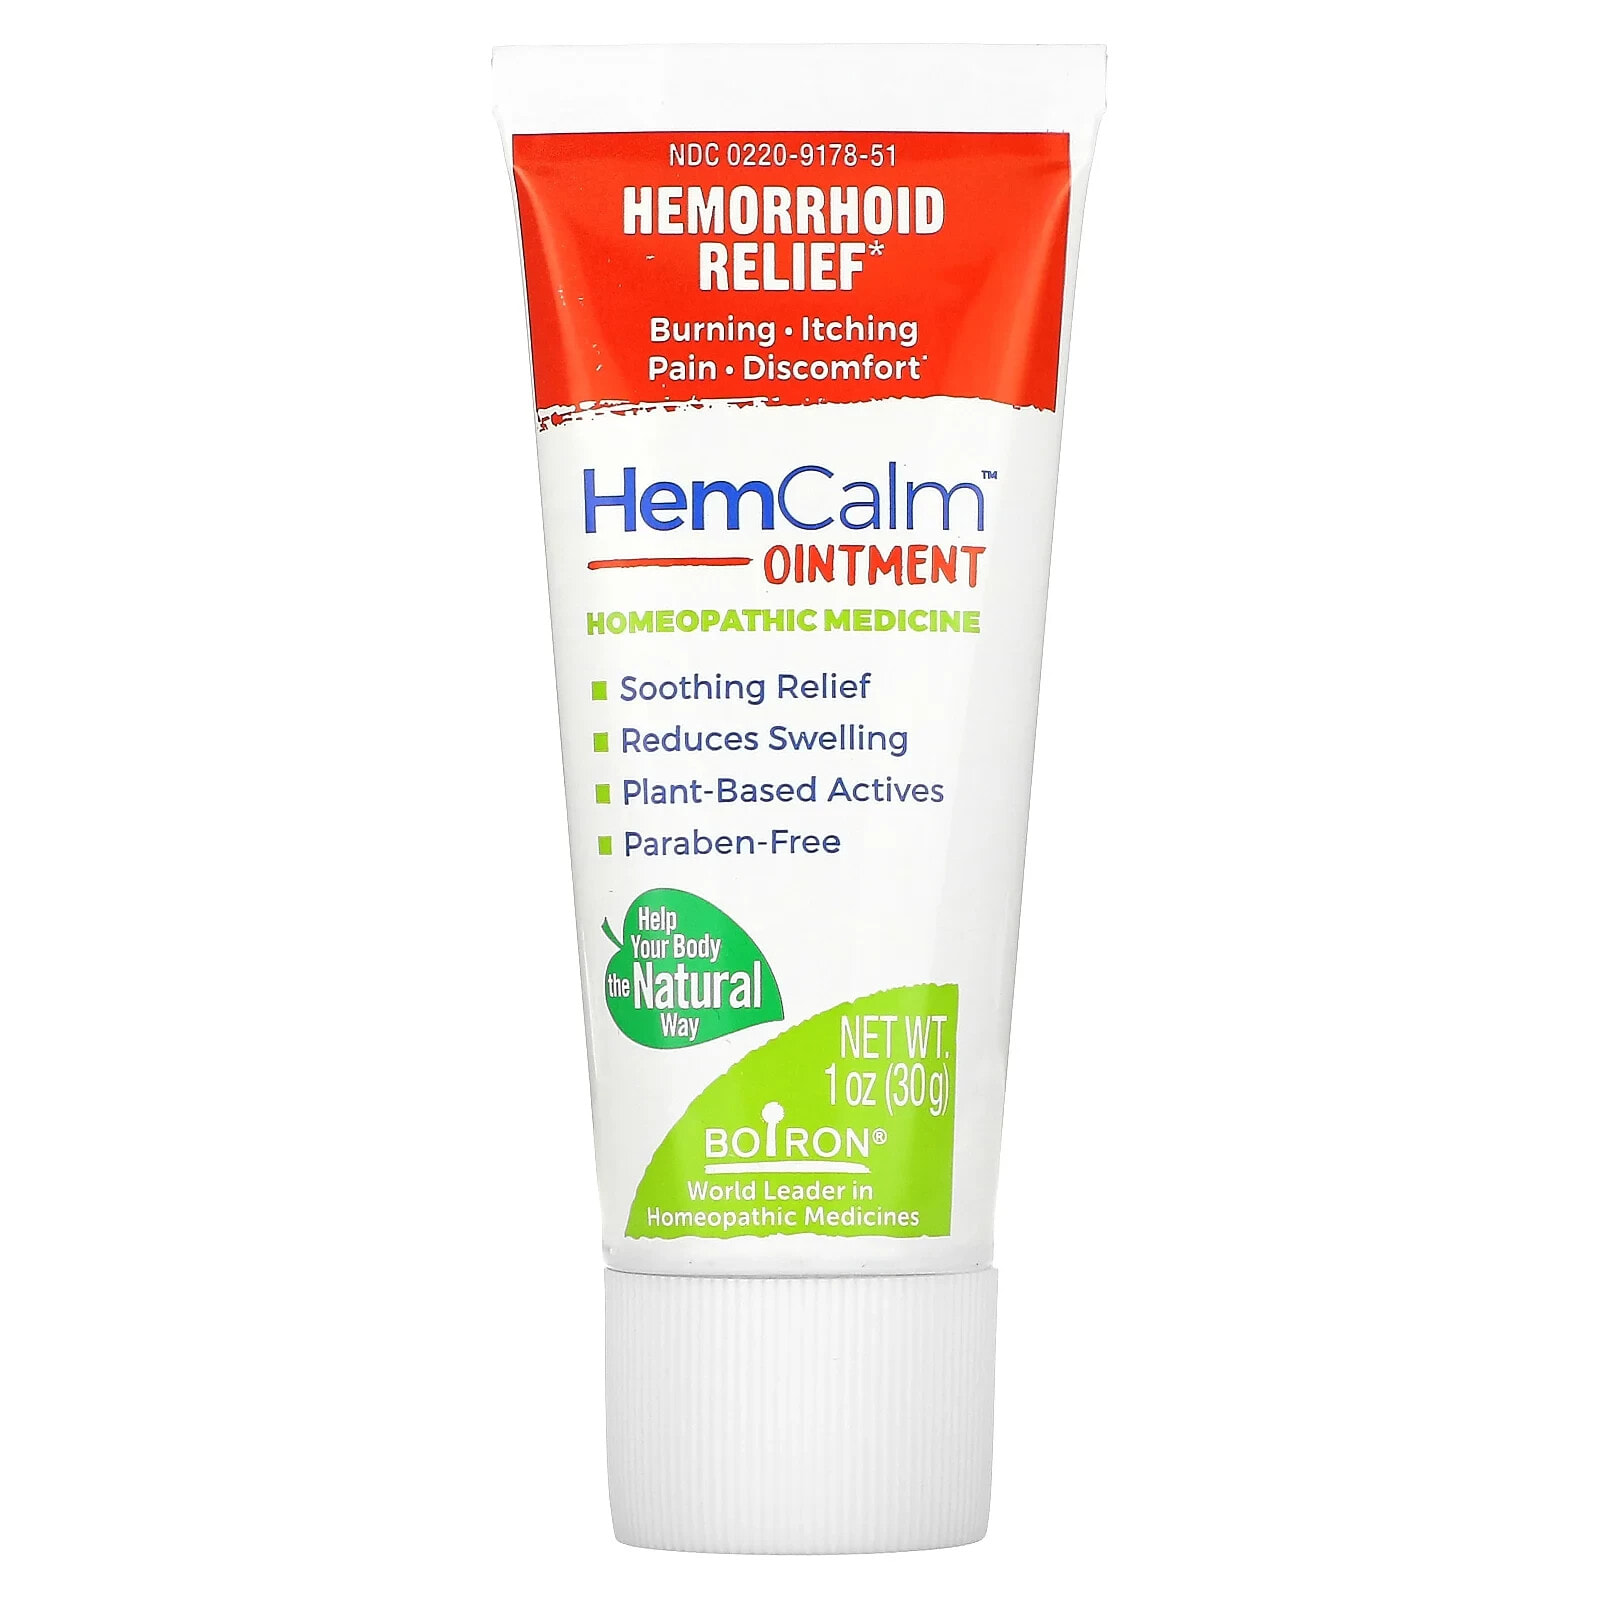 HemCalm Ointment, Hemorrhoid Relief, 1 oz (30 g)